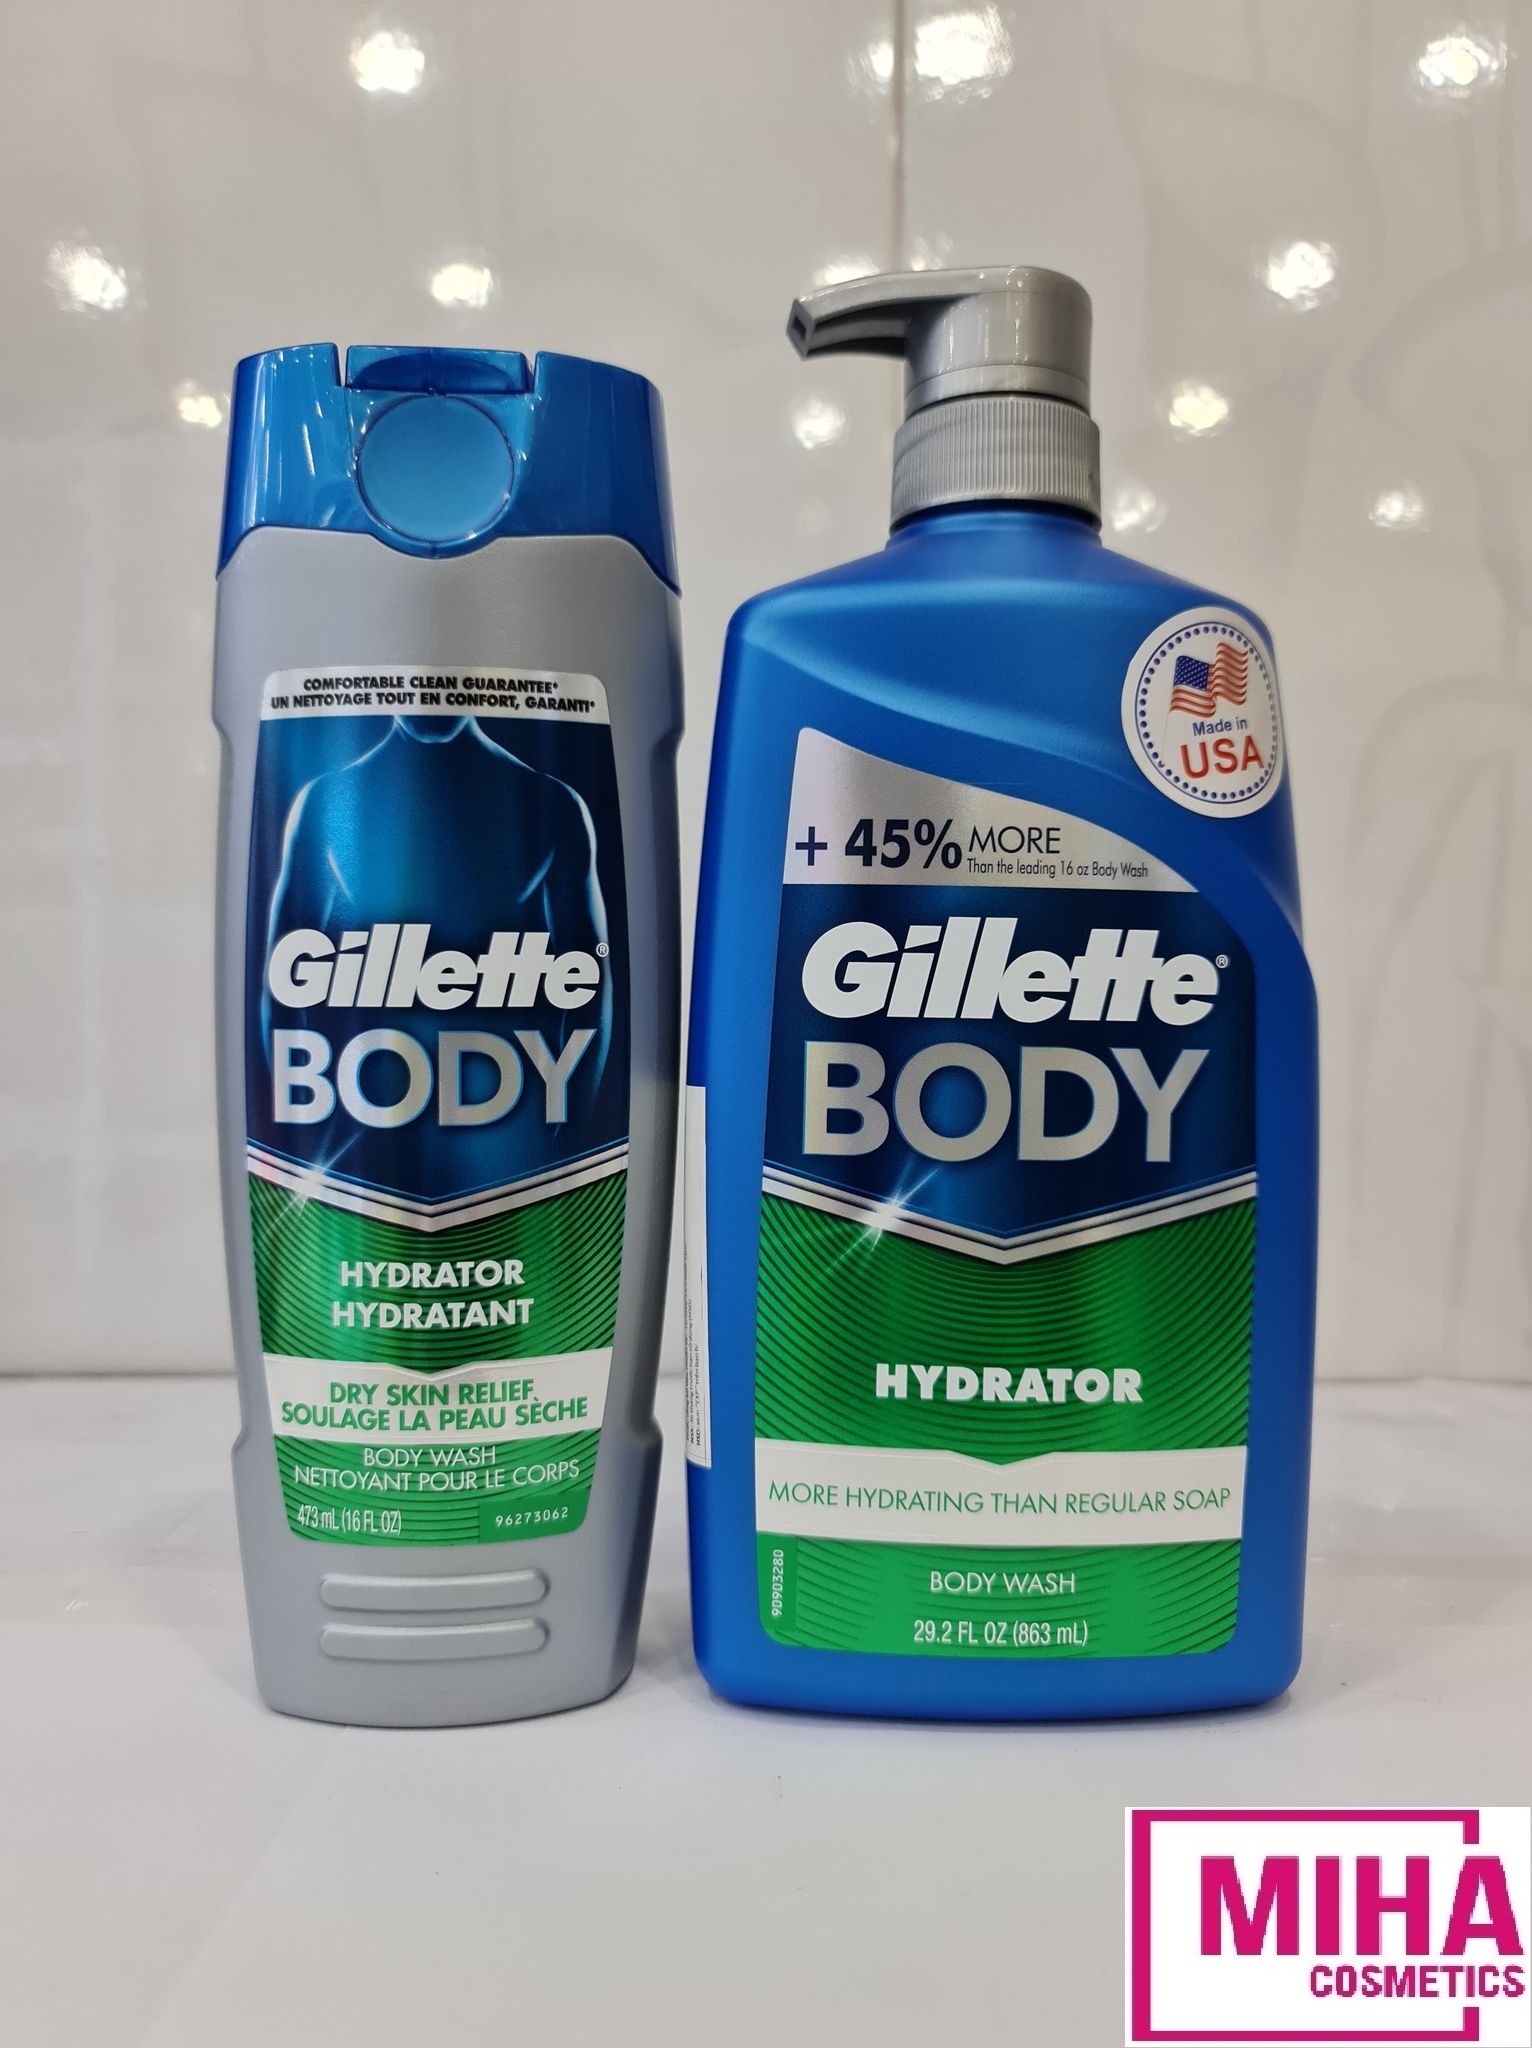 Gillette Body Hydrator Body Wash for Men, 29.2 fl oz 